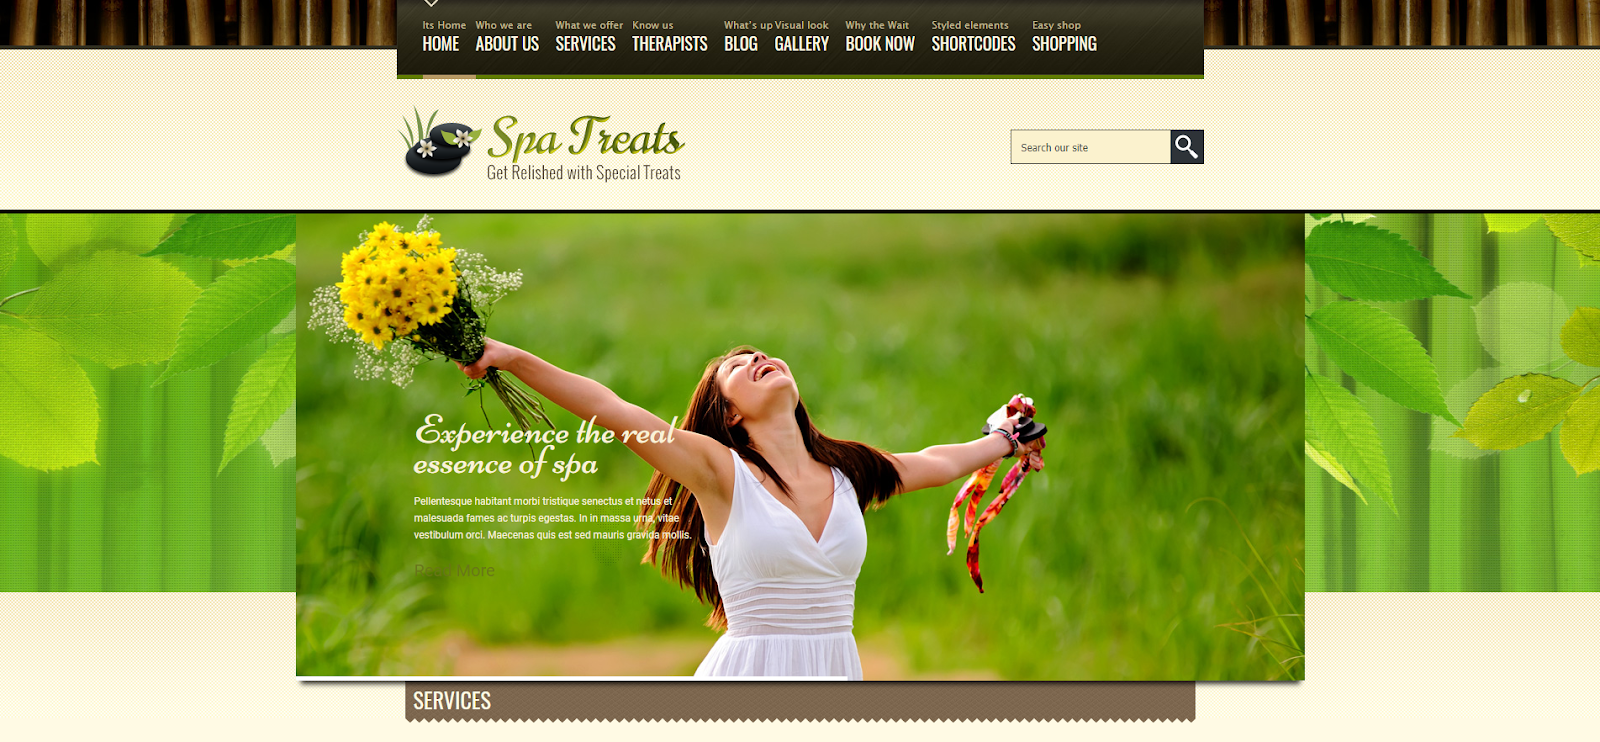 Spa Treats - A WordPress Theme for Wellness and Health